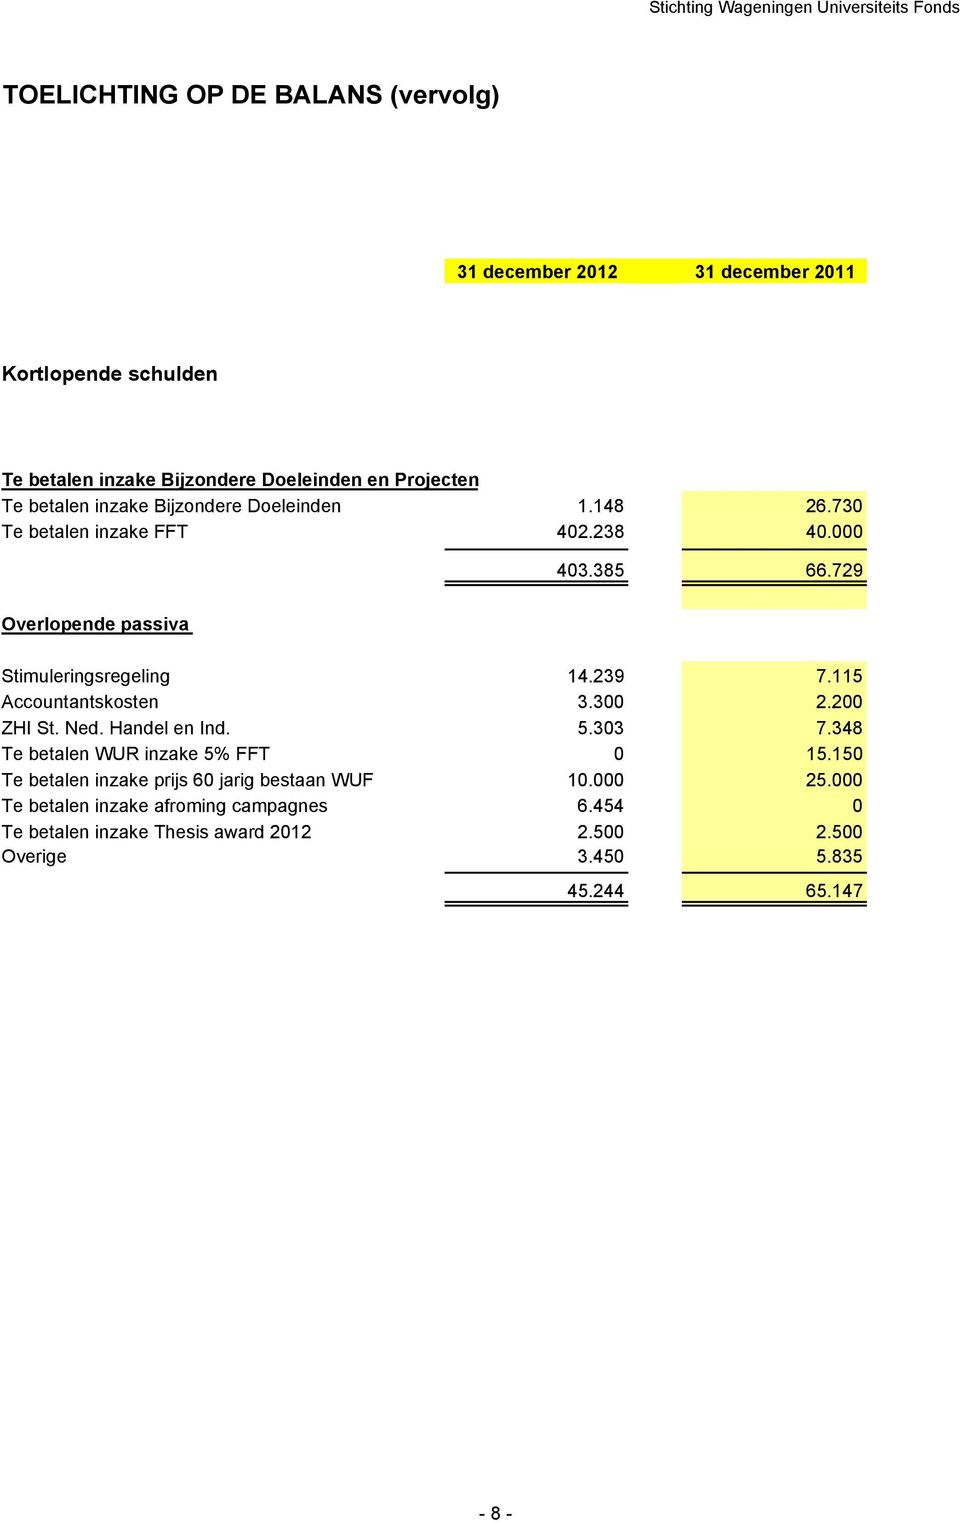 239 7.115 Accountantskosten 3.300 2.200 ZHI St. Ned. Handel en Ind. 5.303 7.348 Te betalen WUR inzake 5% FFT 0 15.